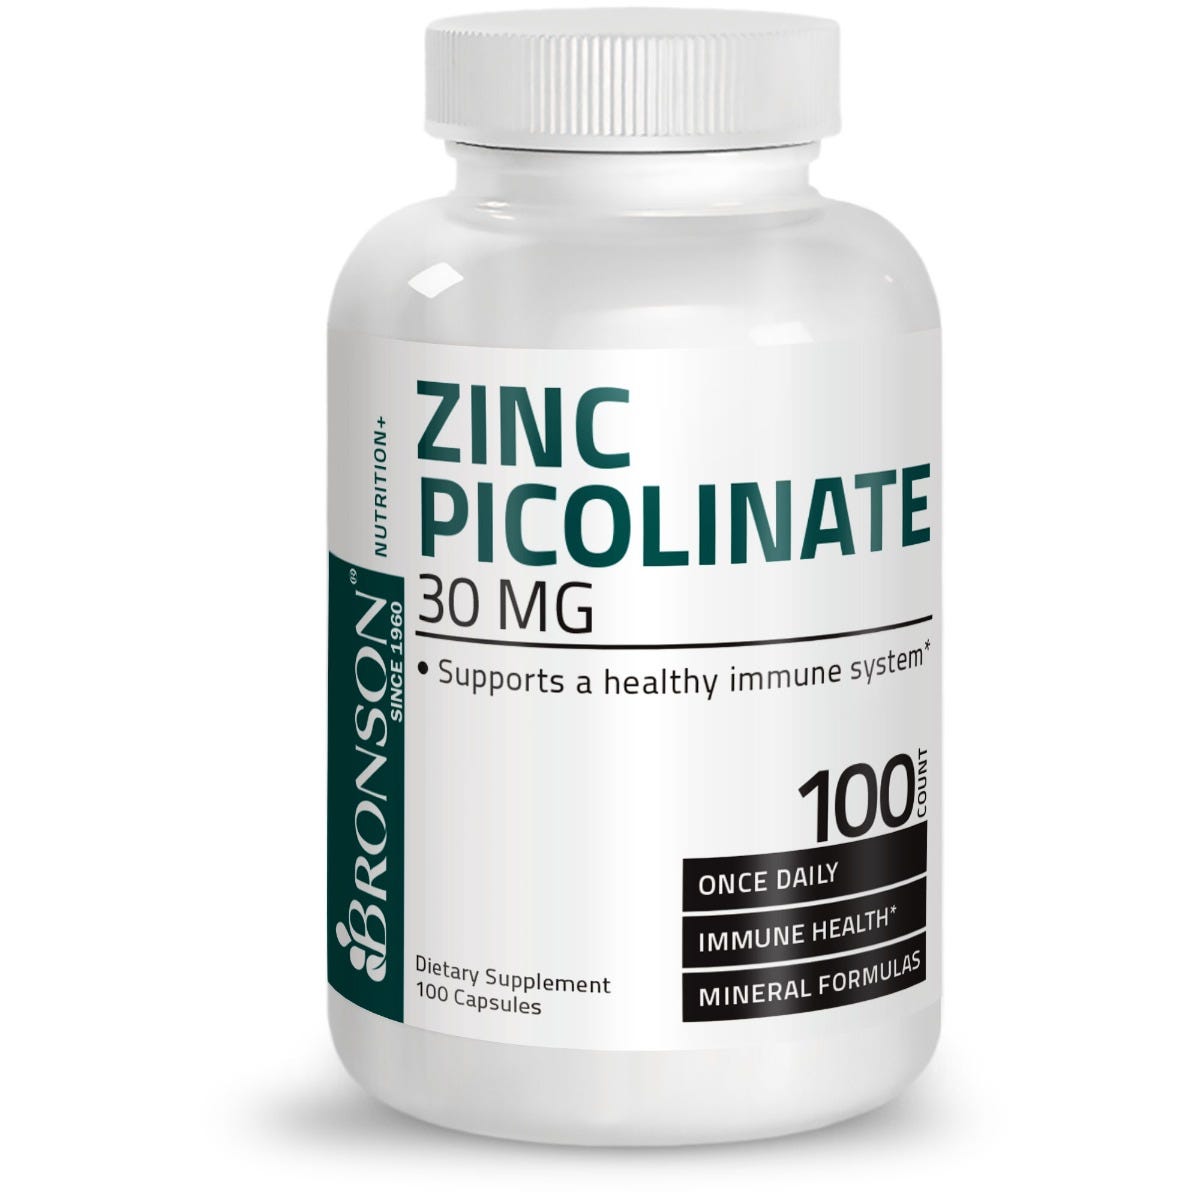 Bronson Vitamins Zinc Picolinate - 30 mg - 100 Capsules, Item #152, Bottle, Front Label